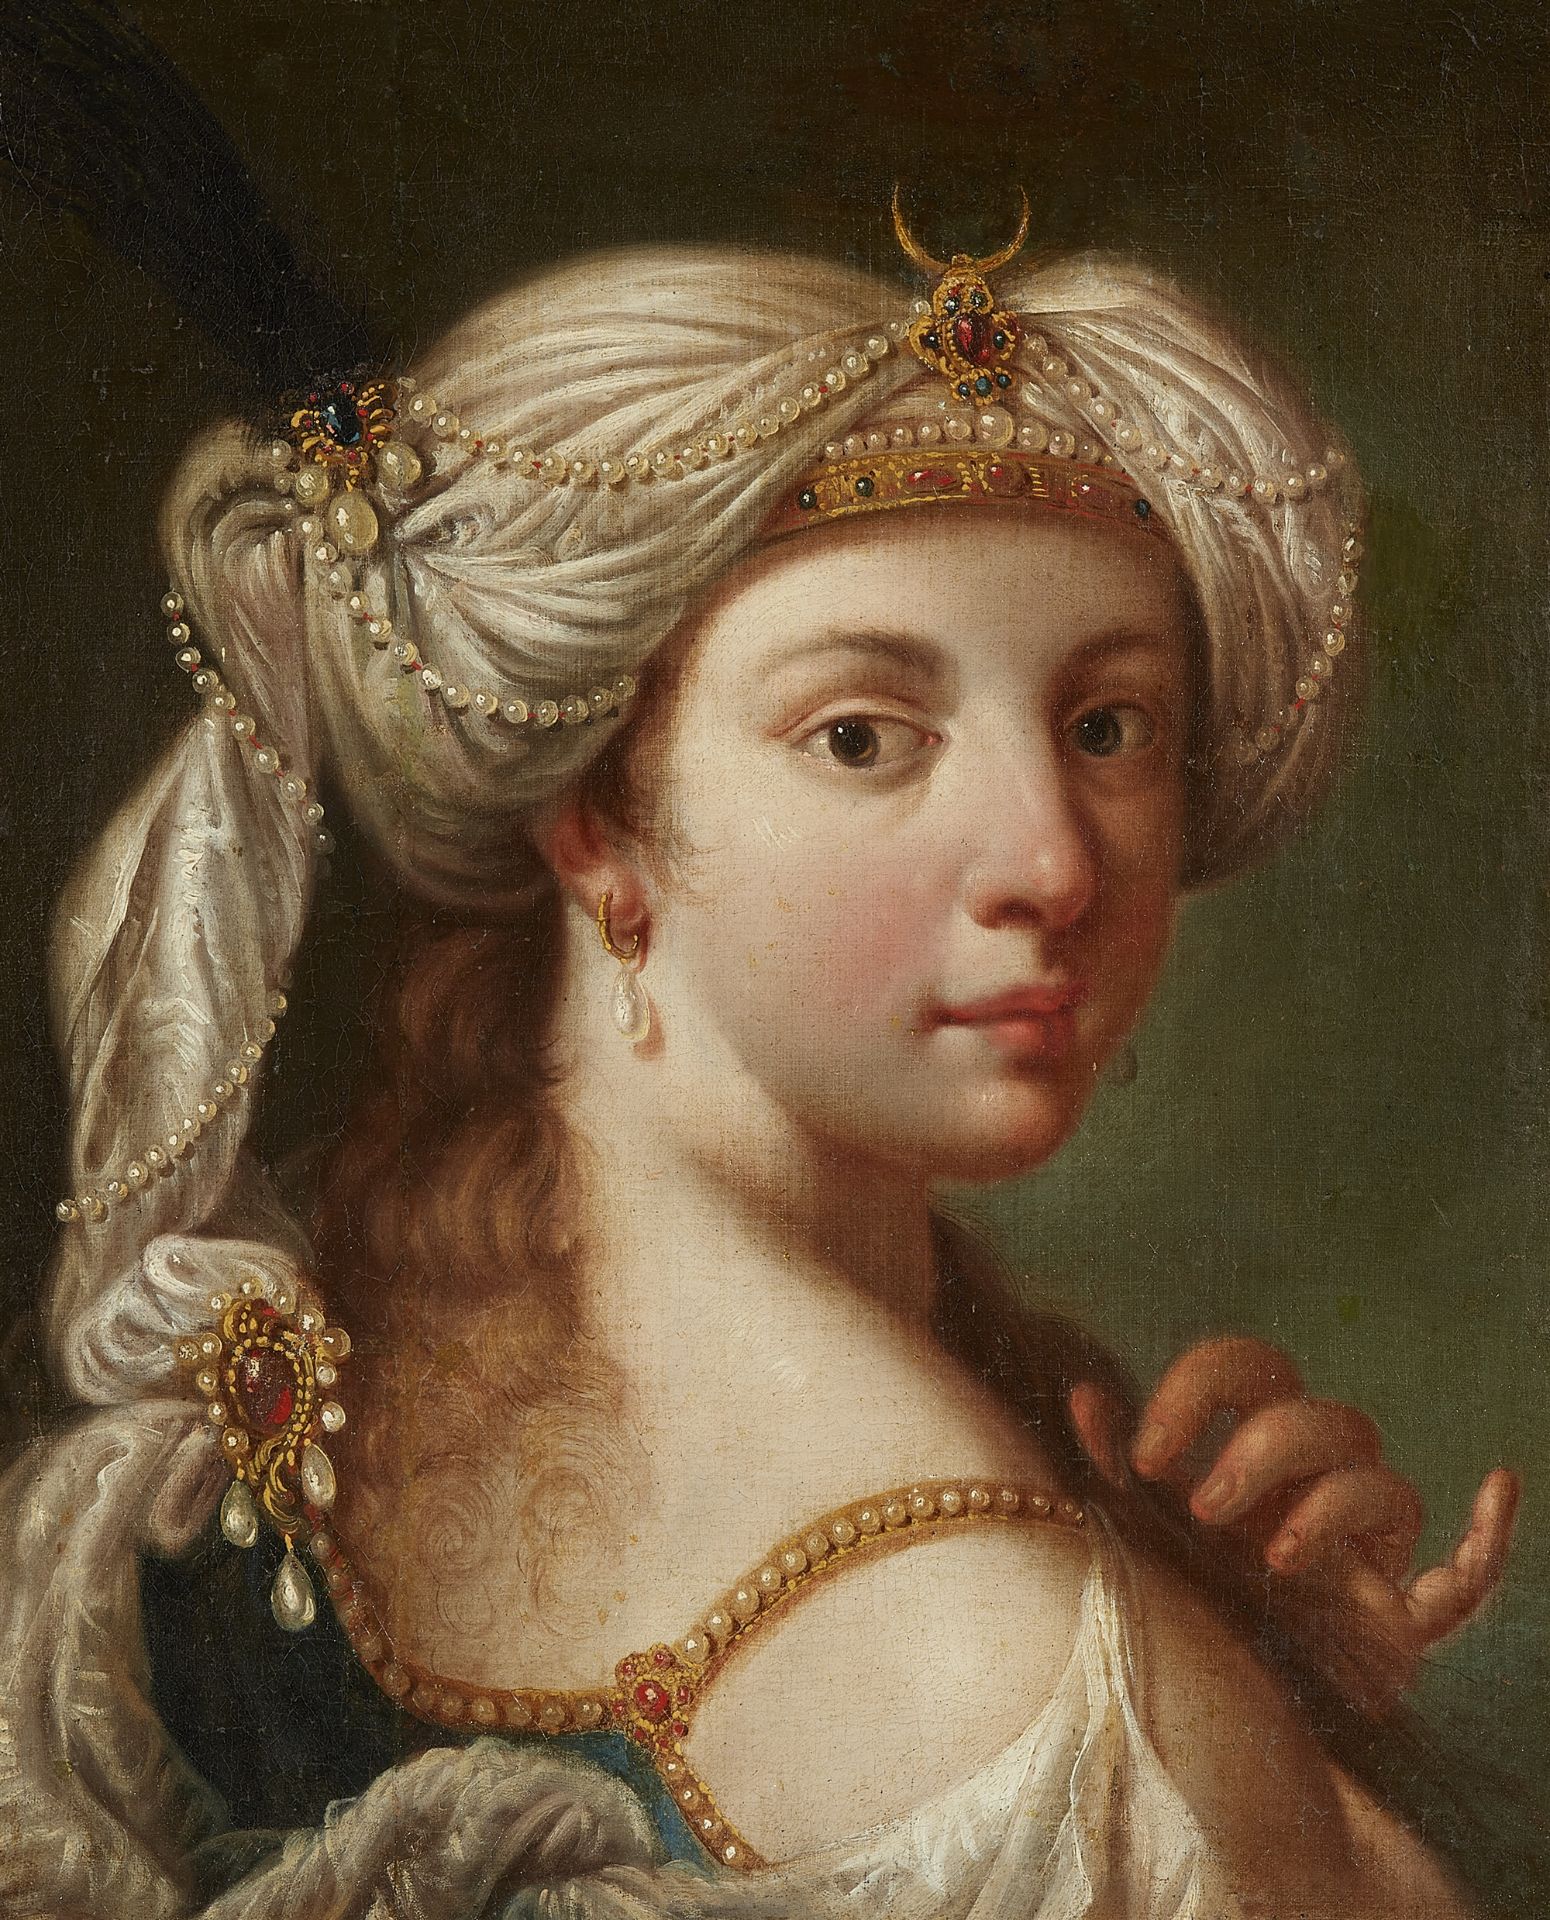 Venetian School 17th/18th century, Portrait of a Lady in Turkish Costume